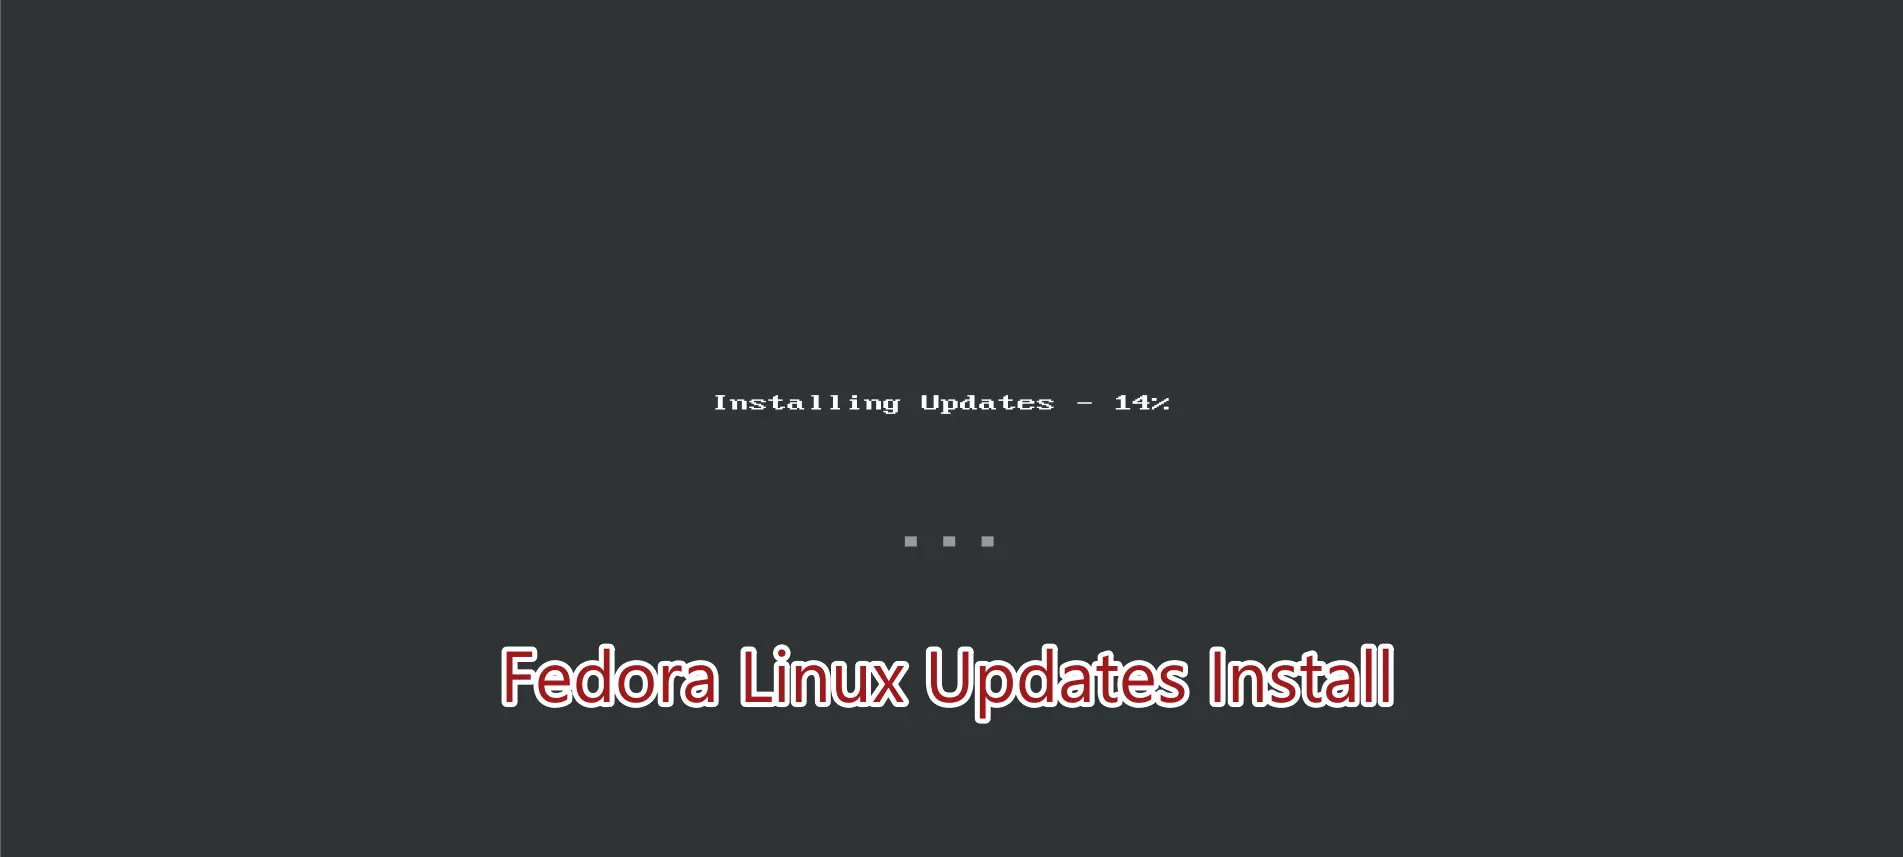 Fedora Linux Updates Install